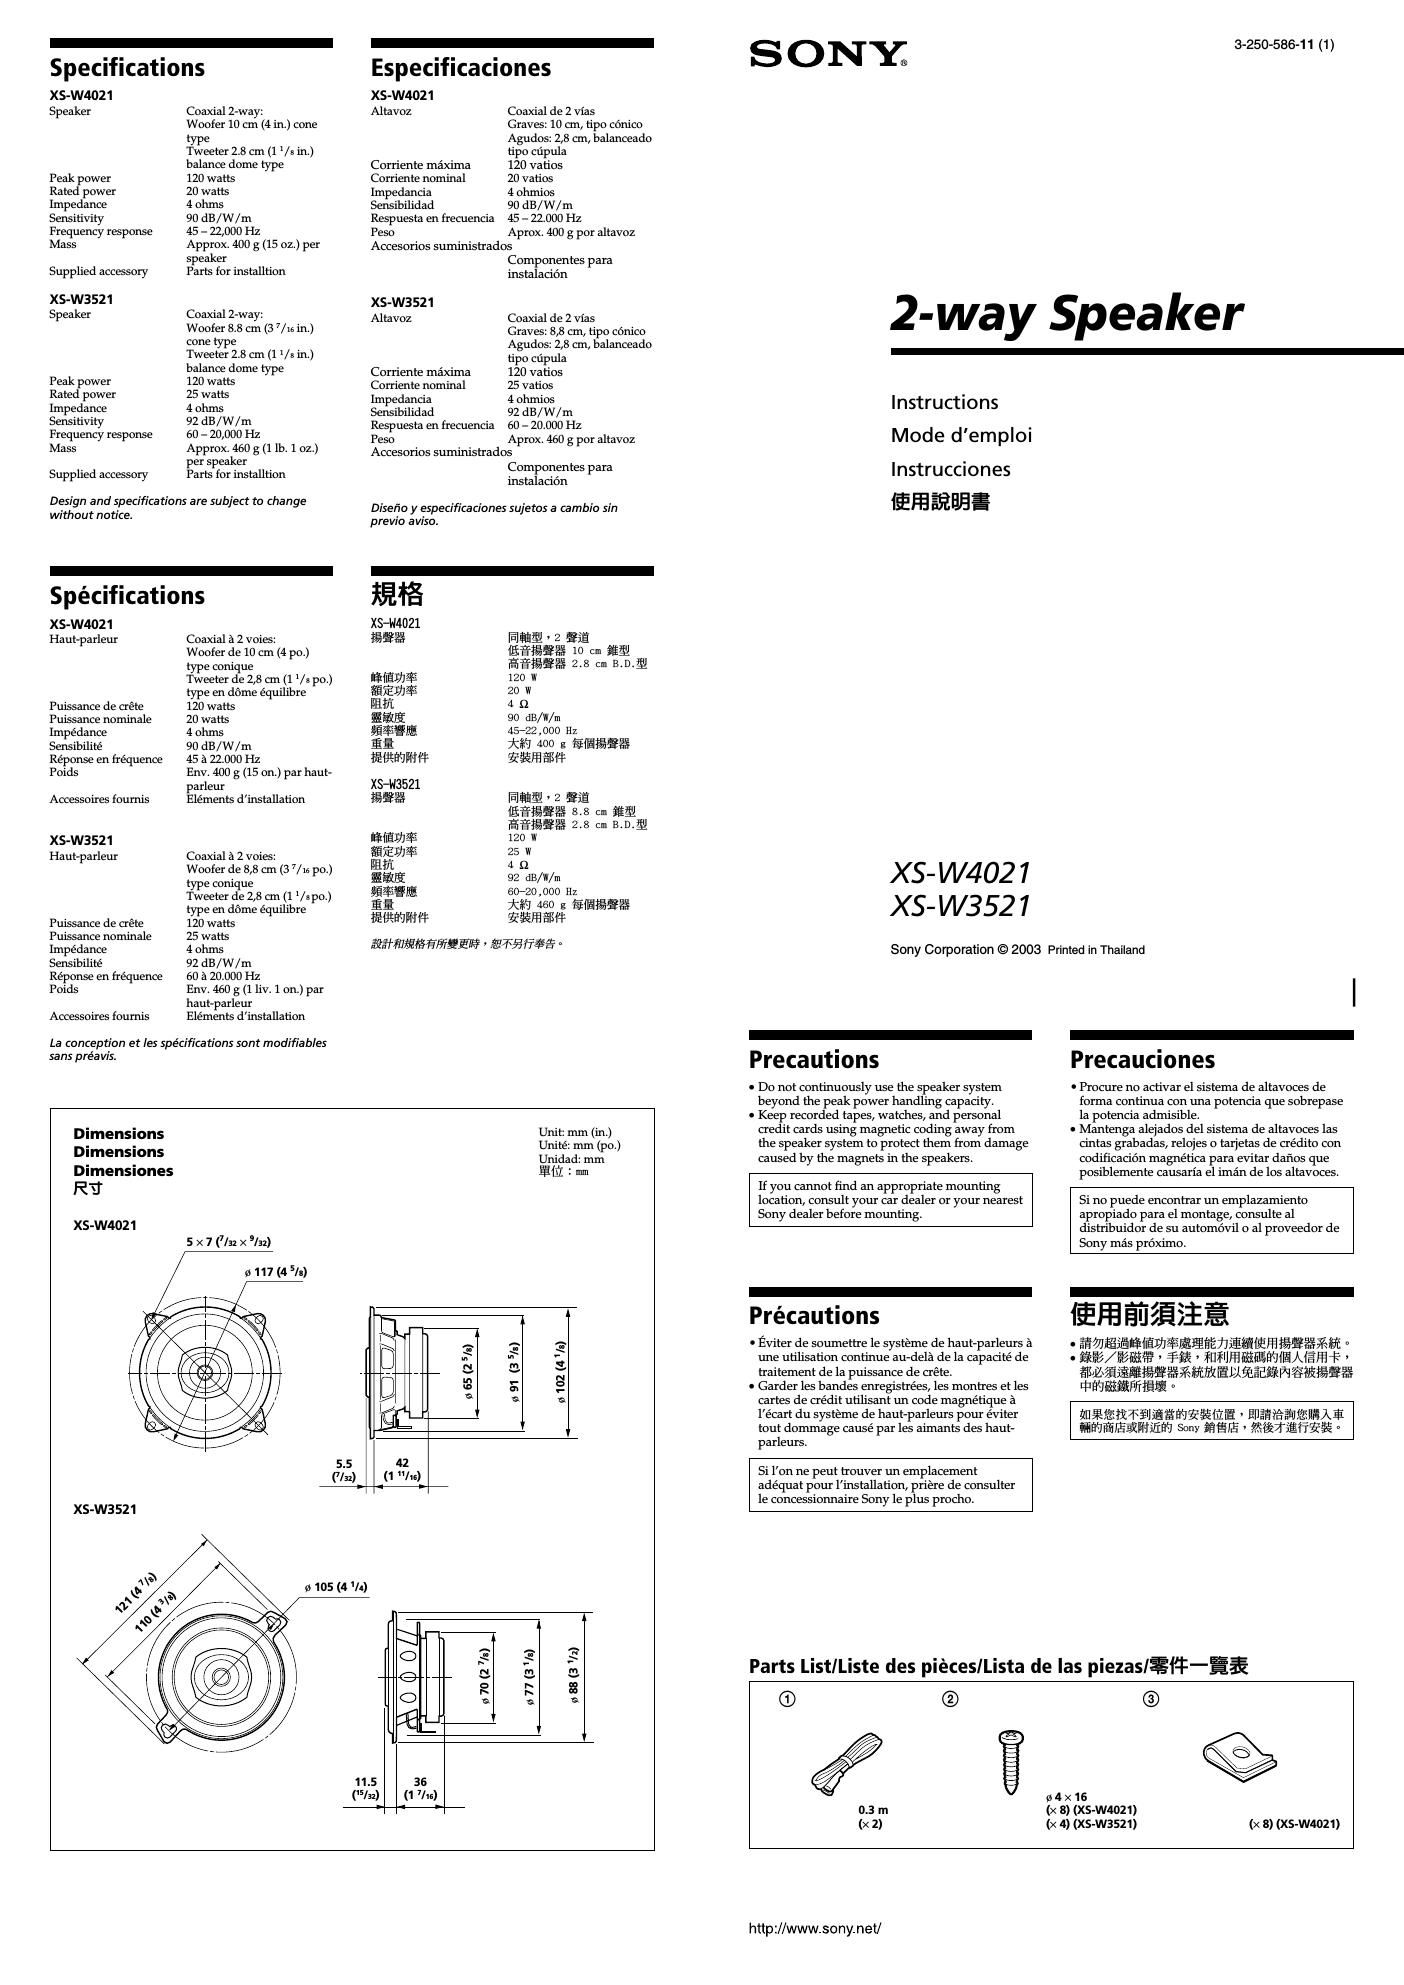 sony xs w 4021 owners manual